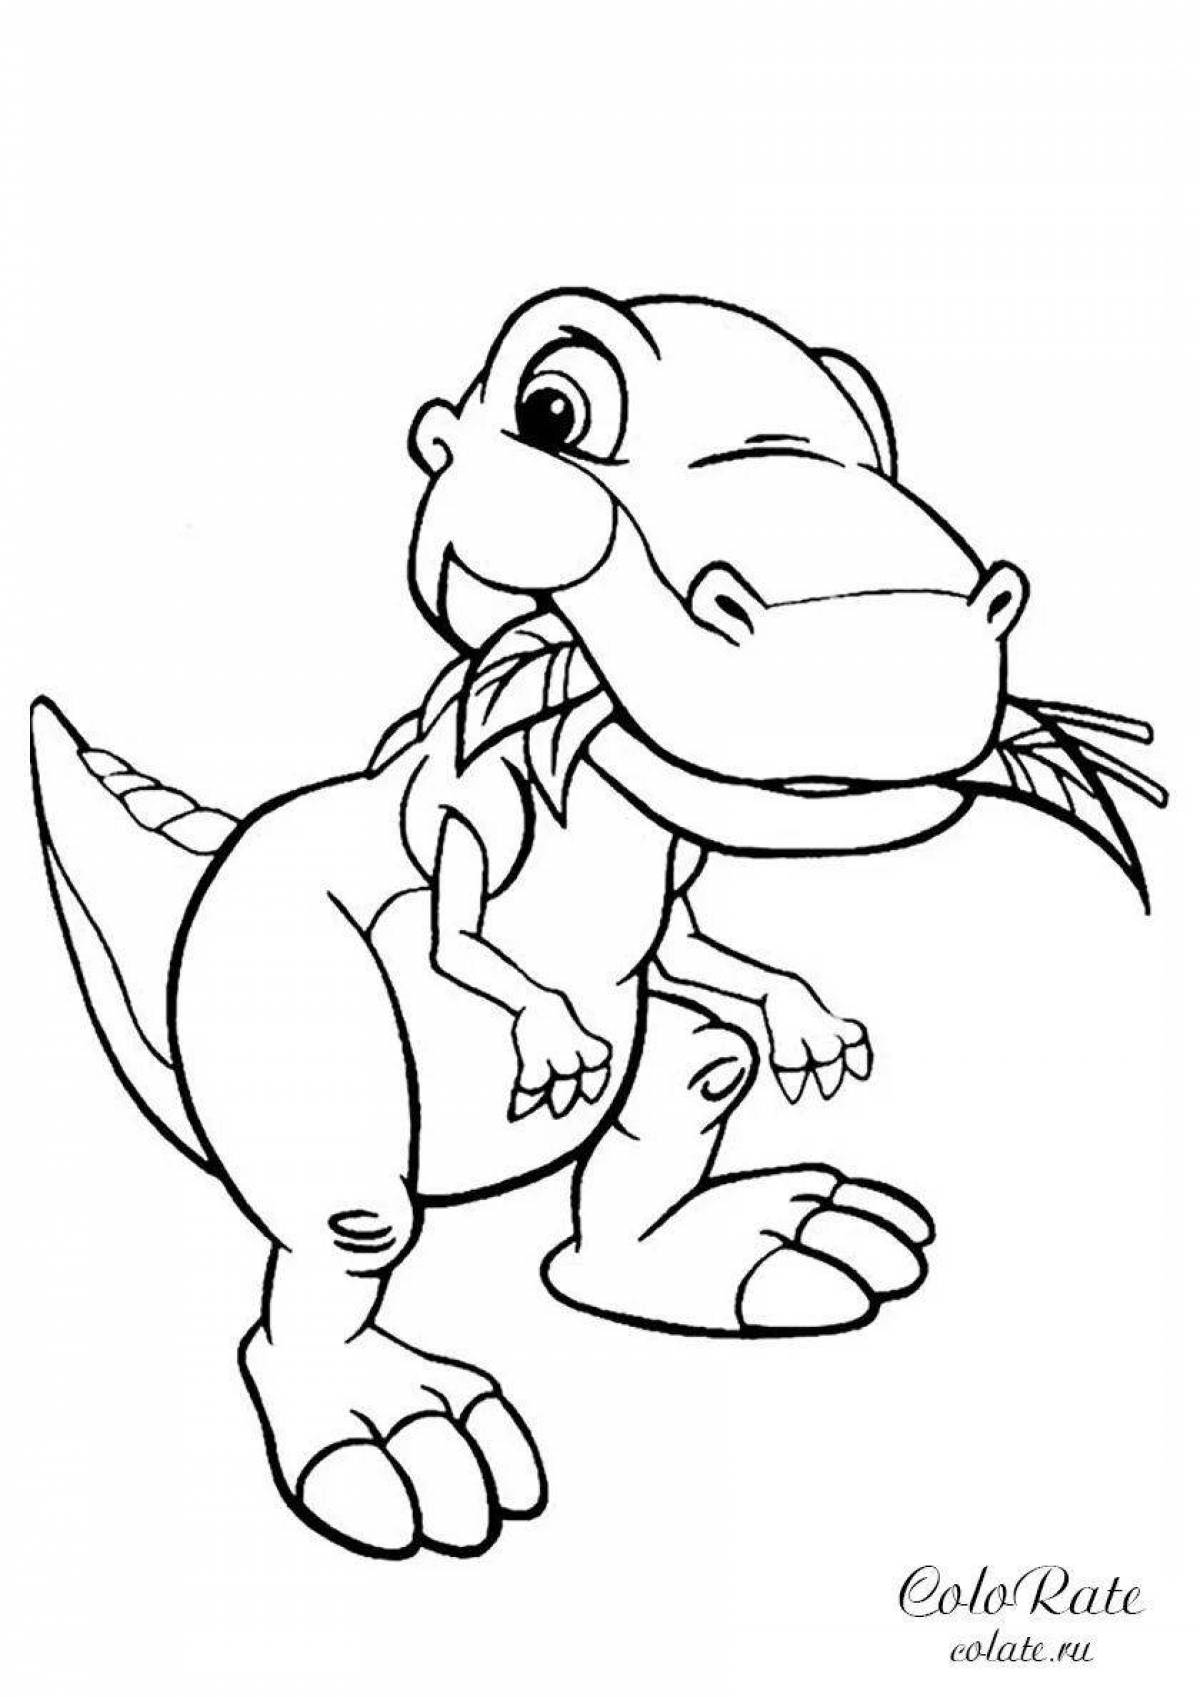 Bright cartoon dinosaur coloring book